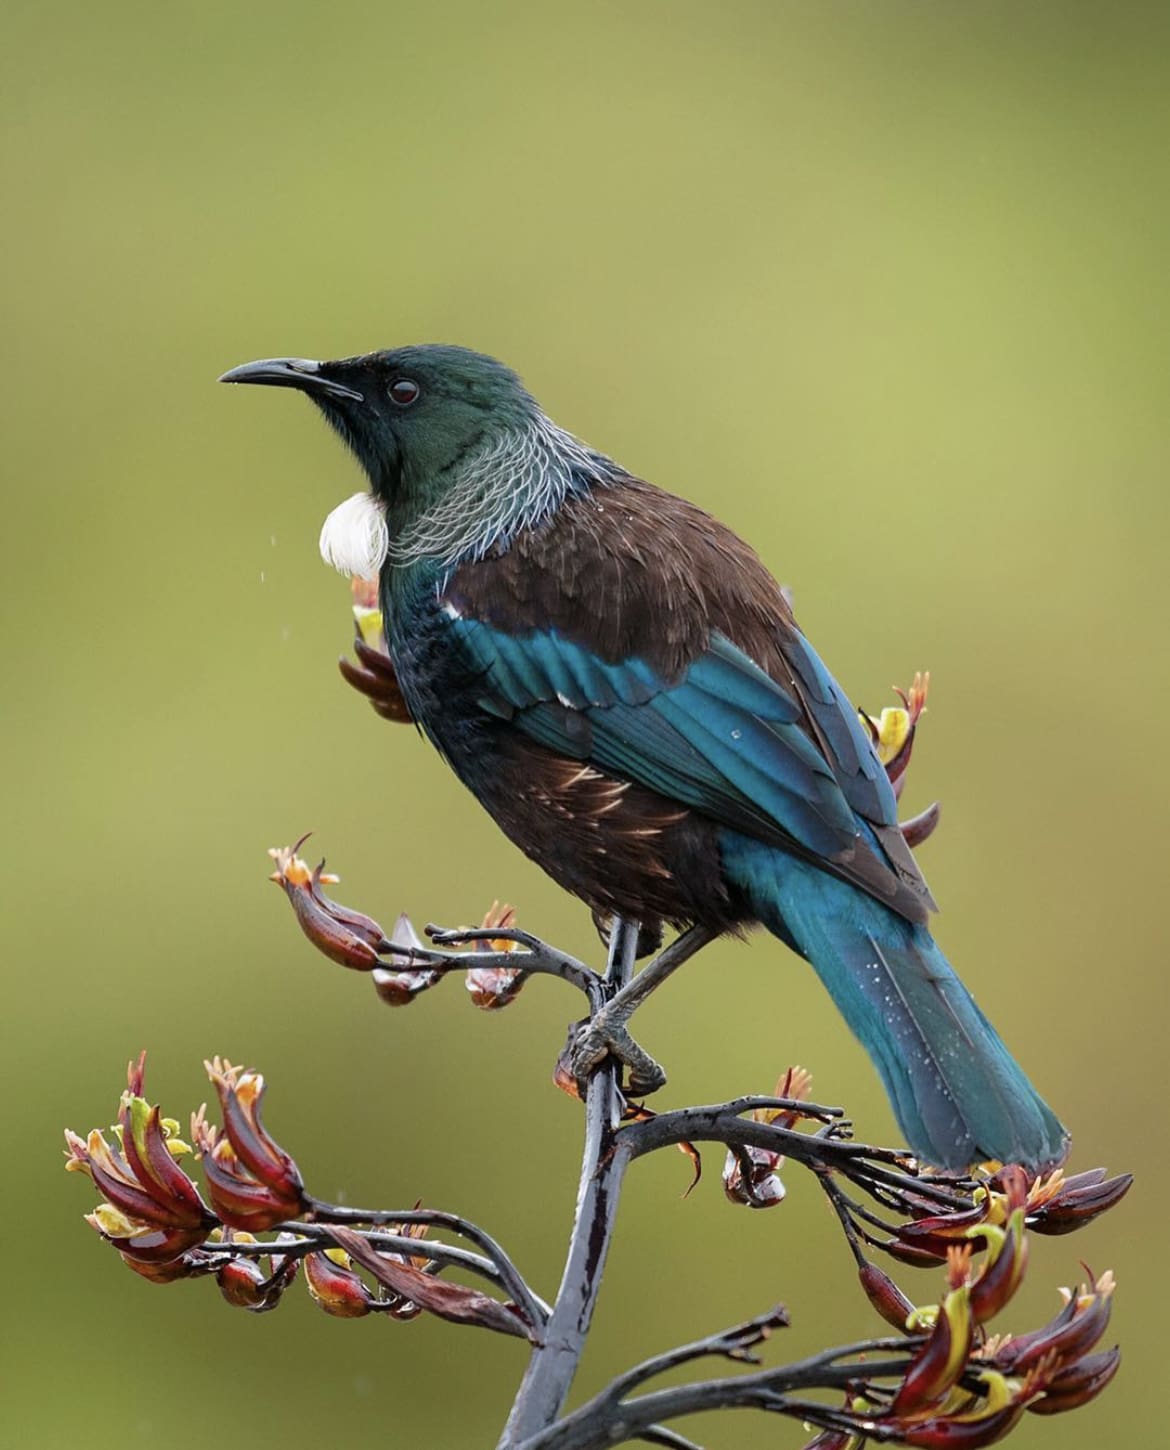 Tui bird - animals in New Zealand